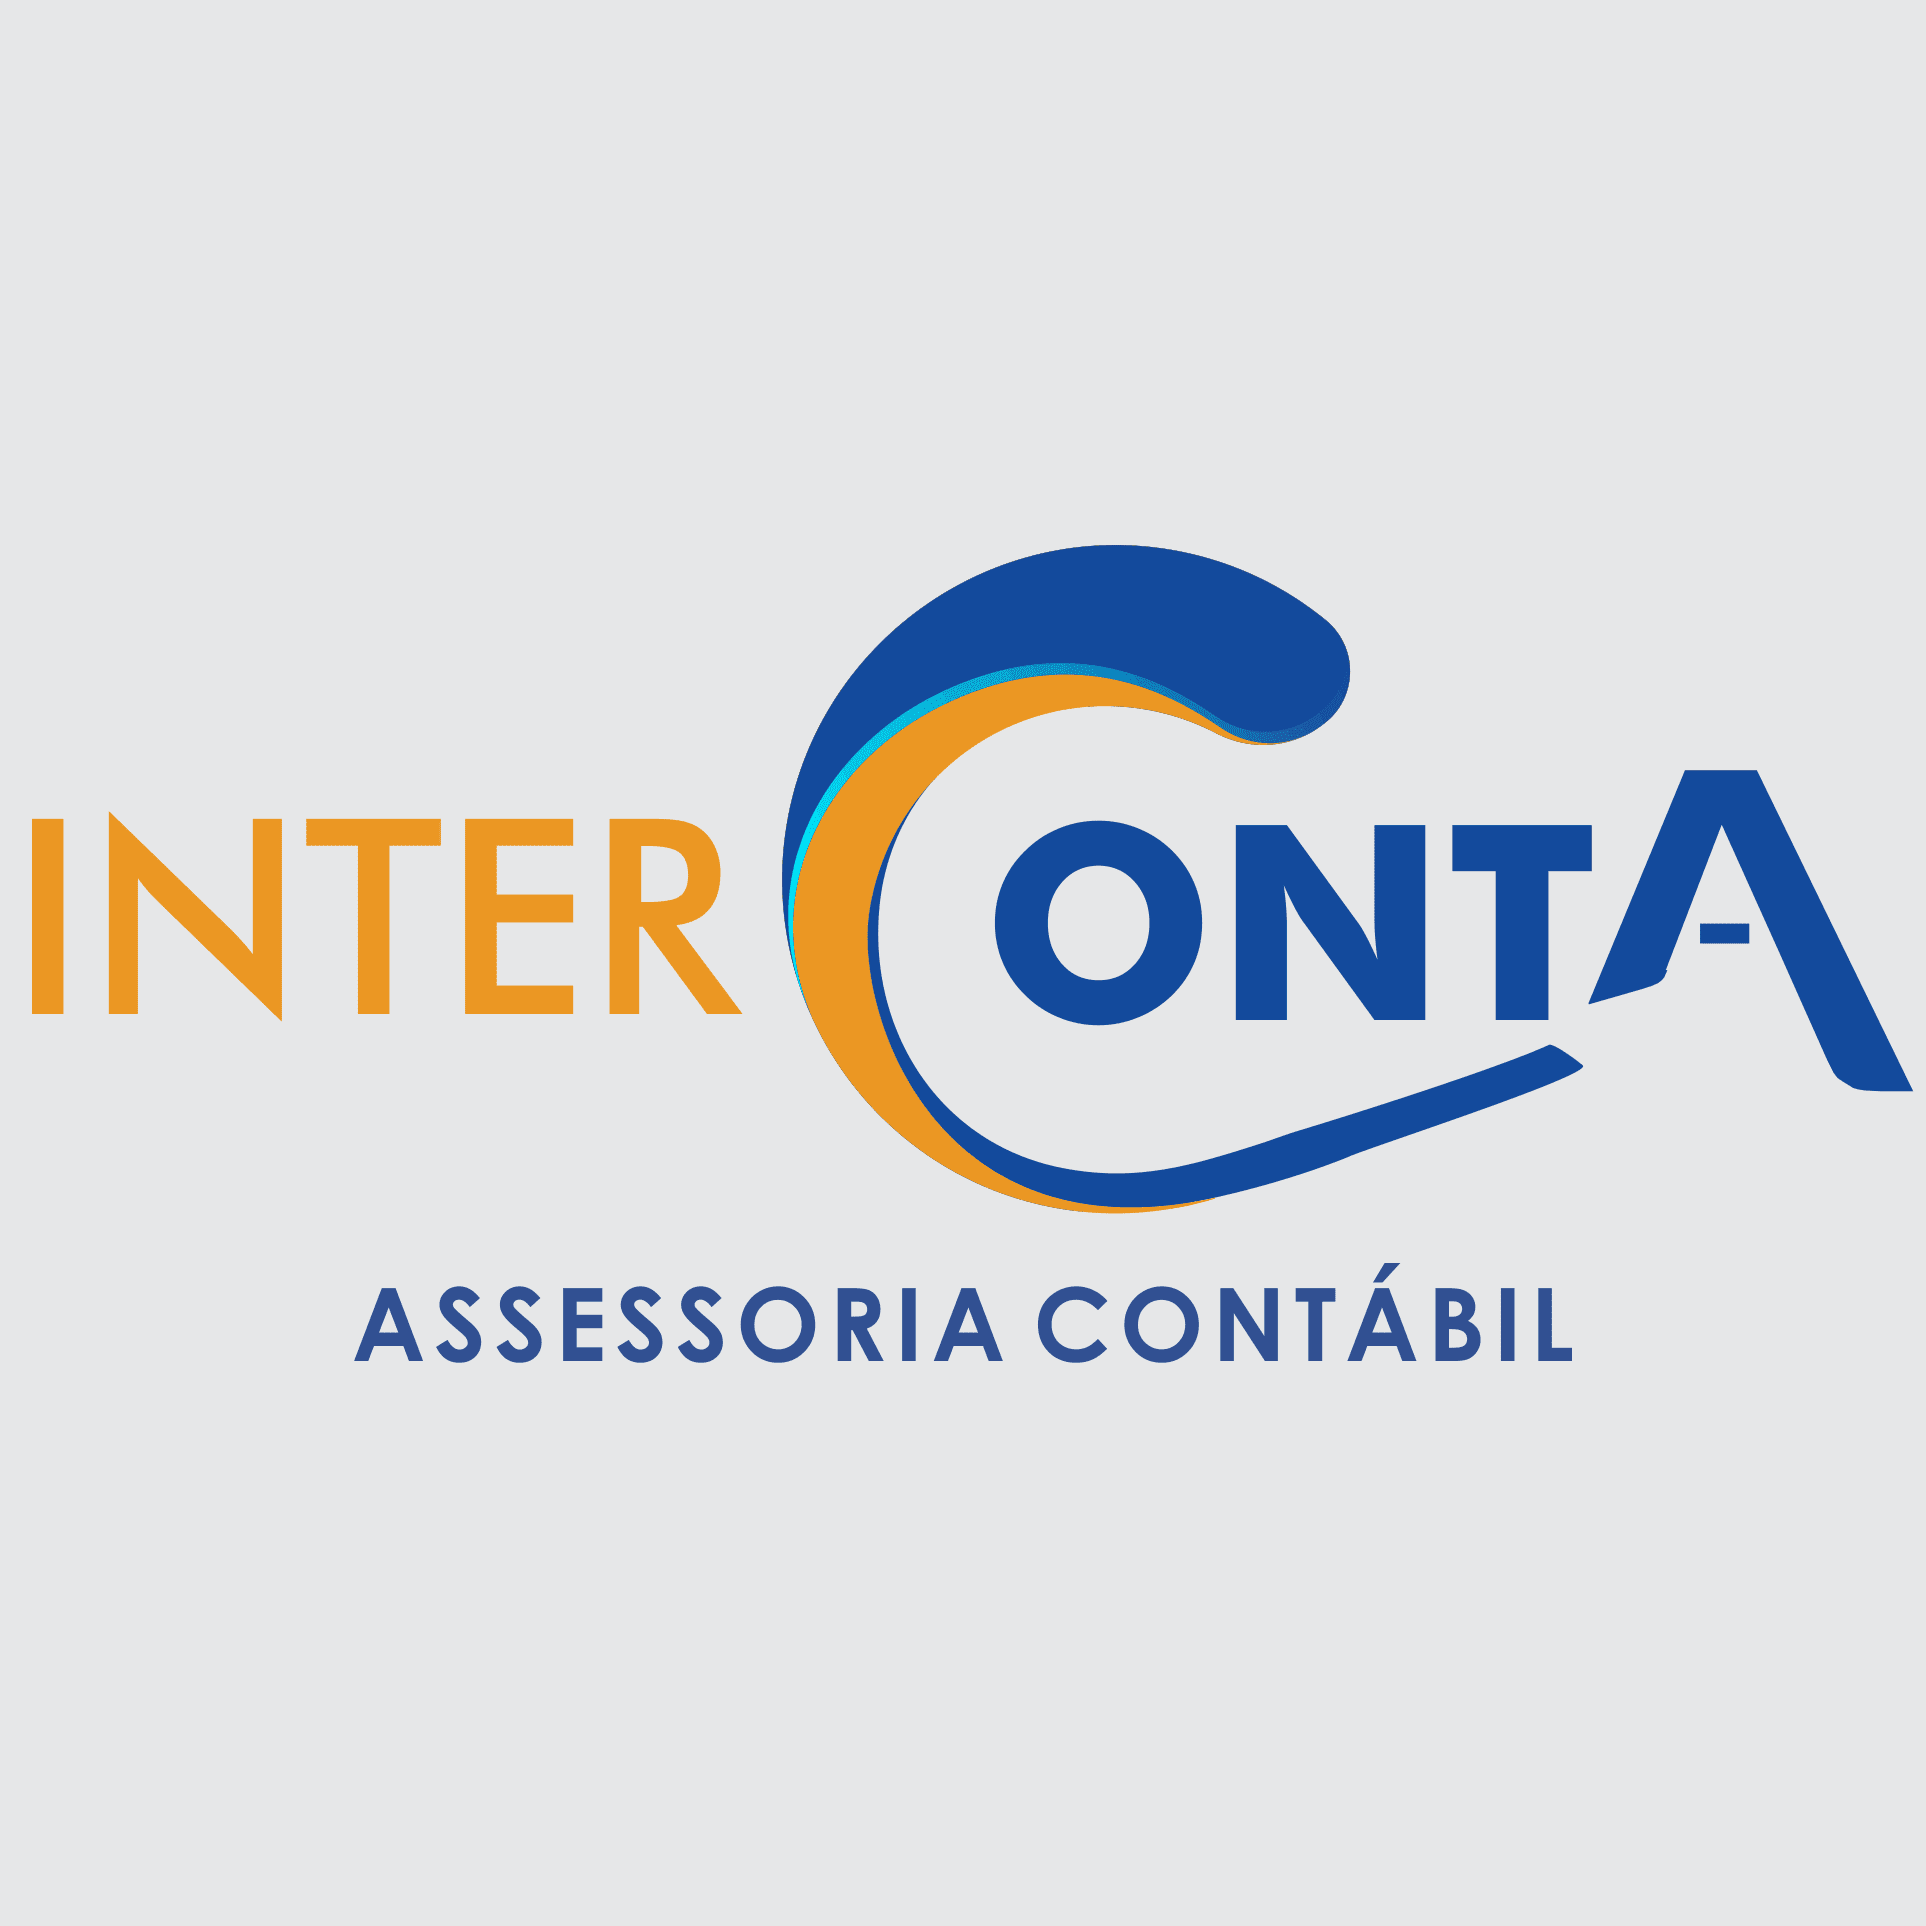 InterConta Assessoria Contábil